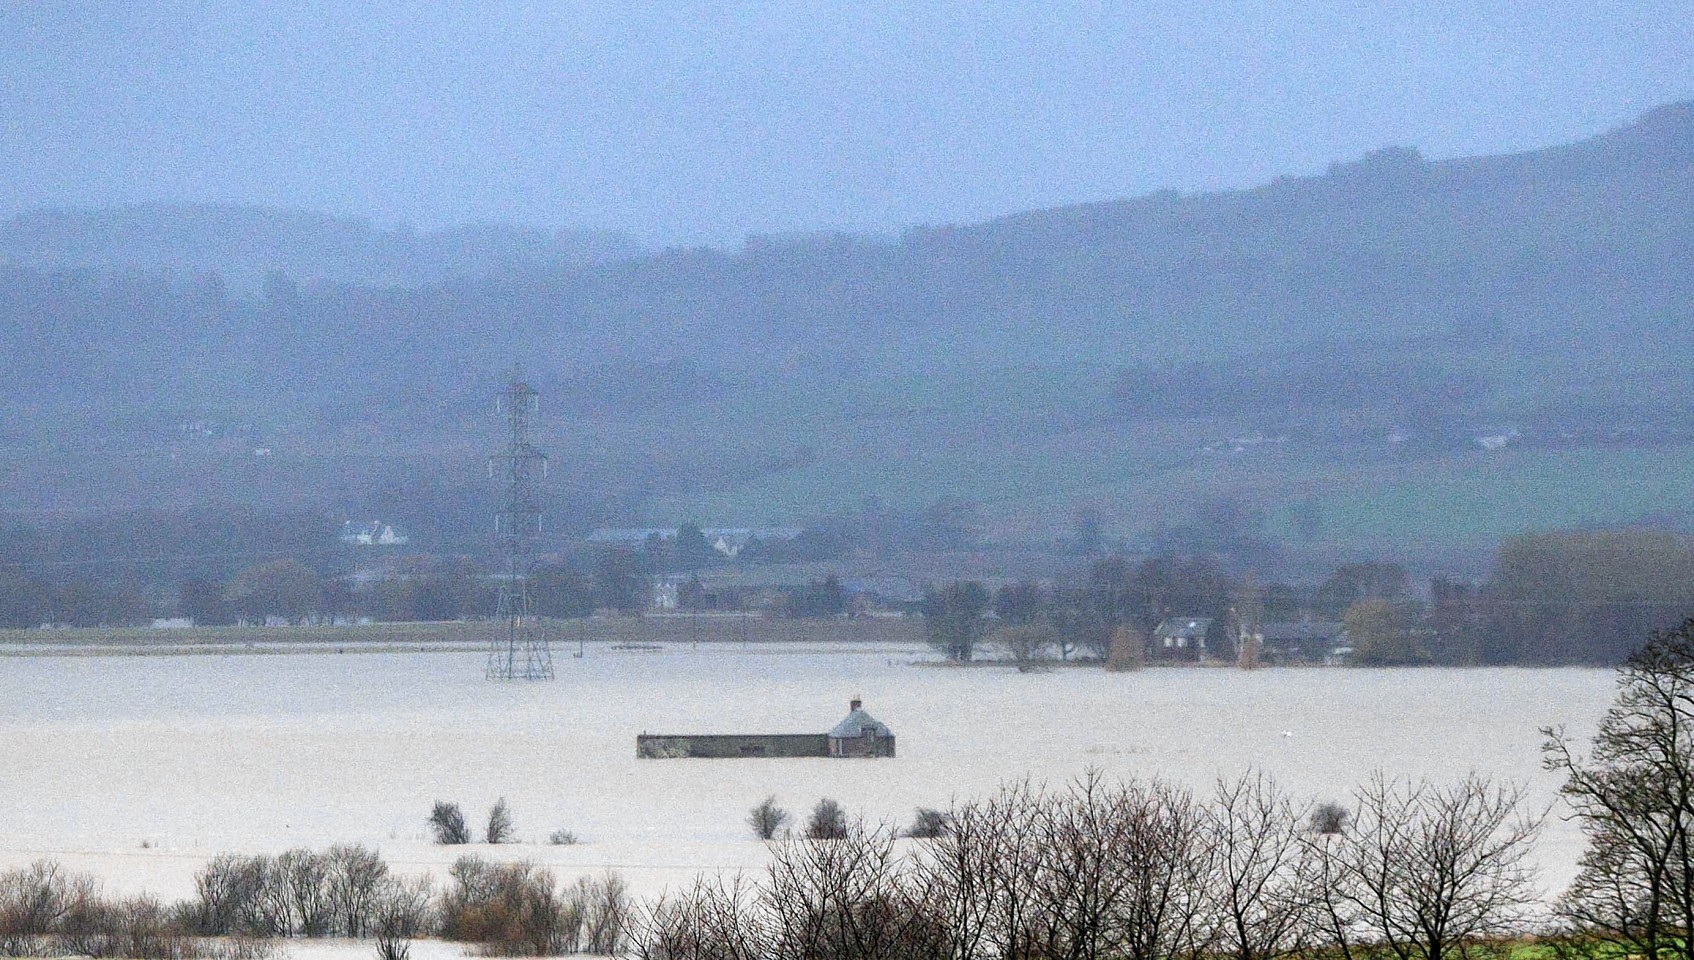 The River Isla has burst its banks flooding many surrounding roads and bridges